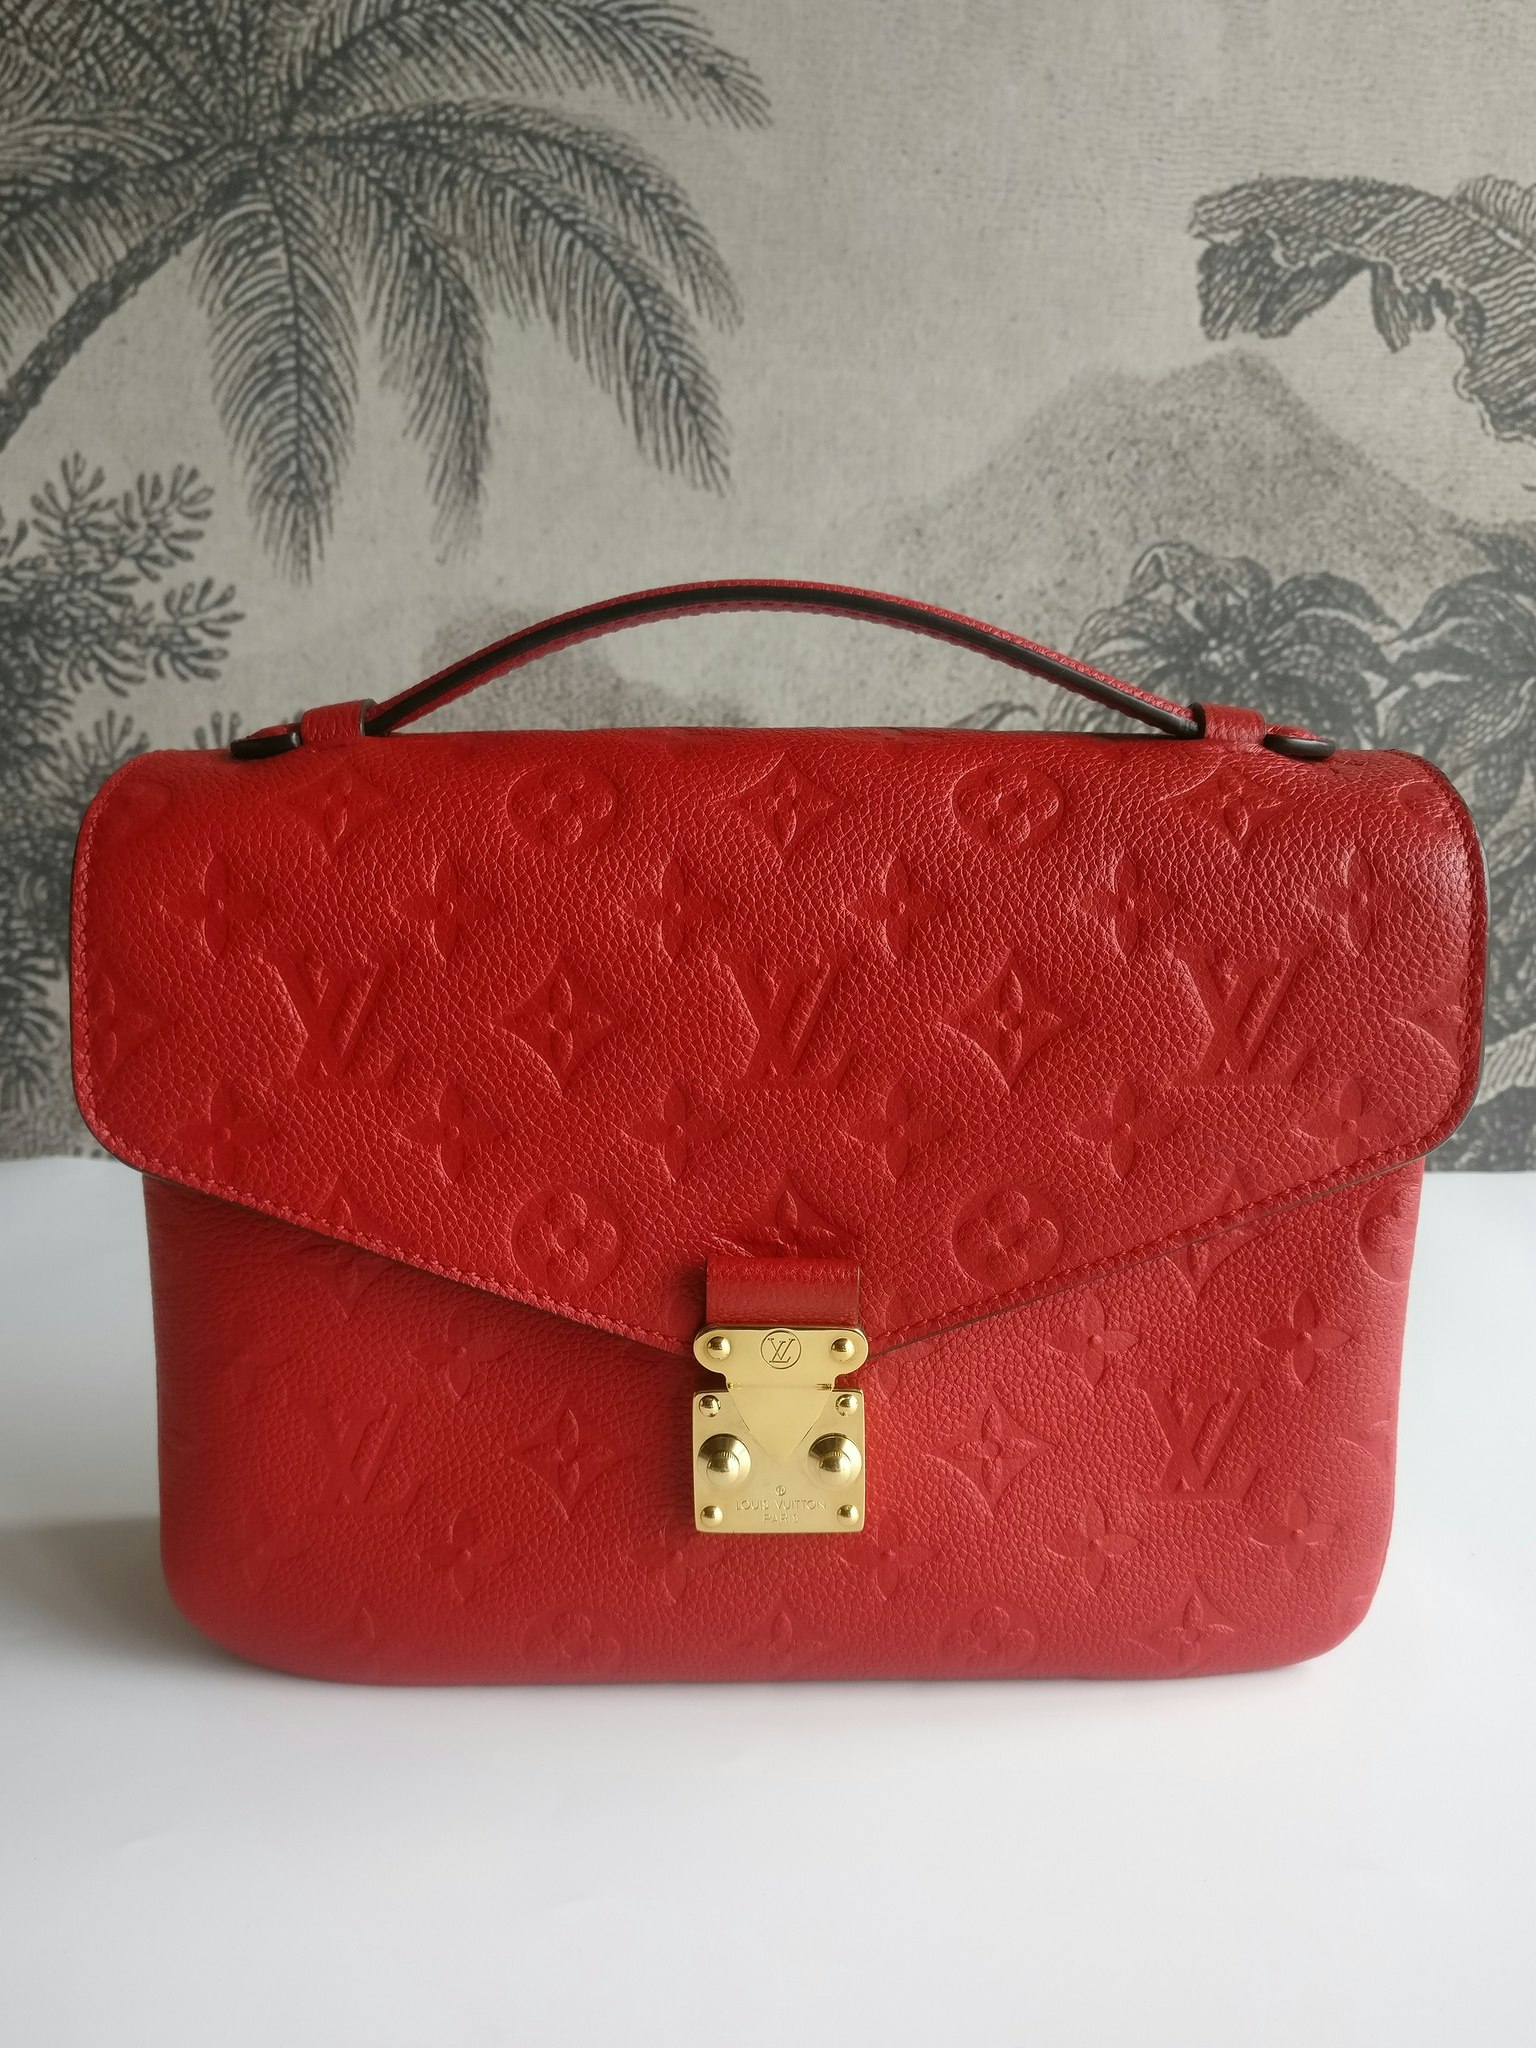 Louis Vuitton Cherry Red Empreinte Key Pouch with Box